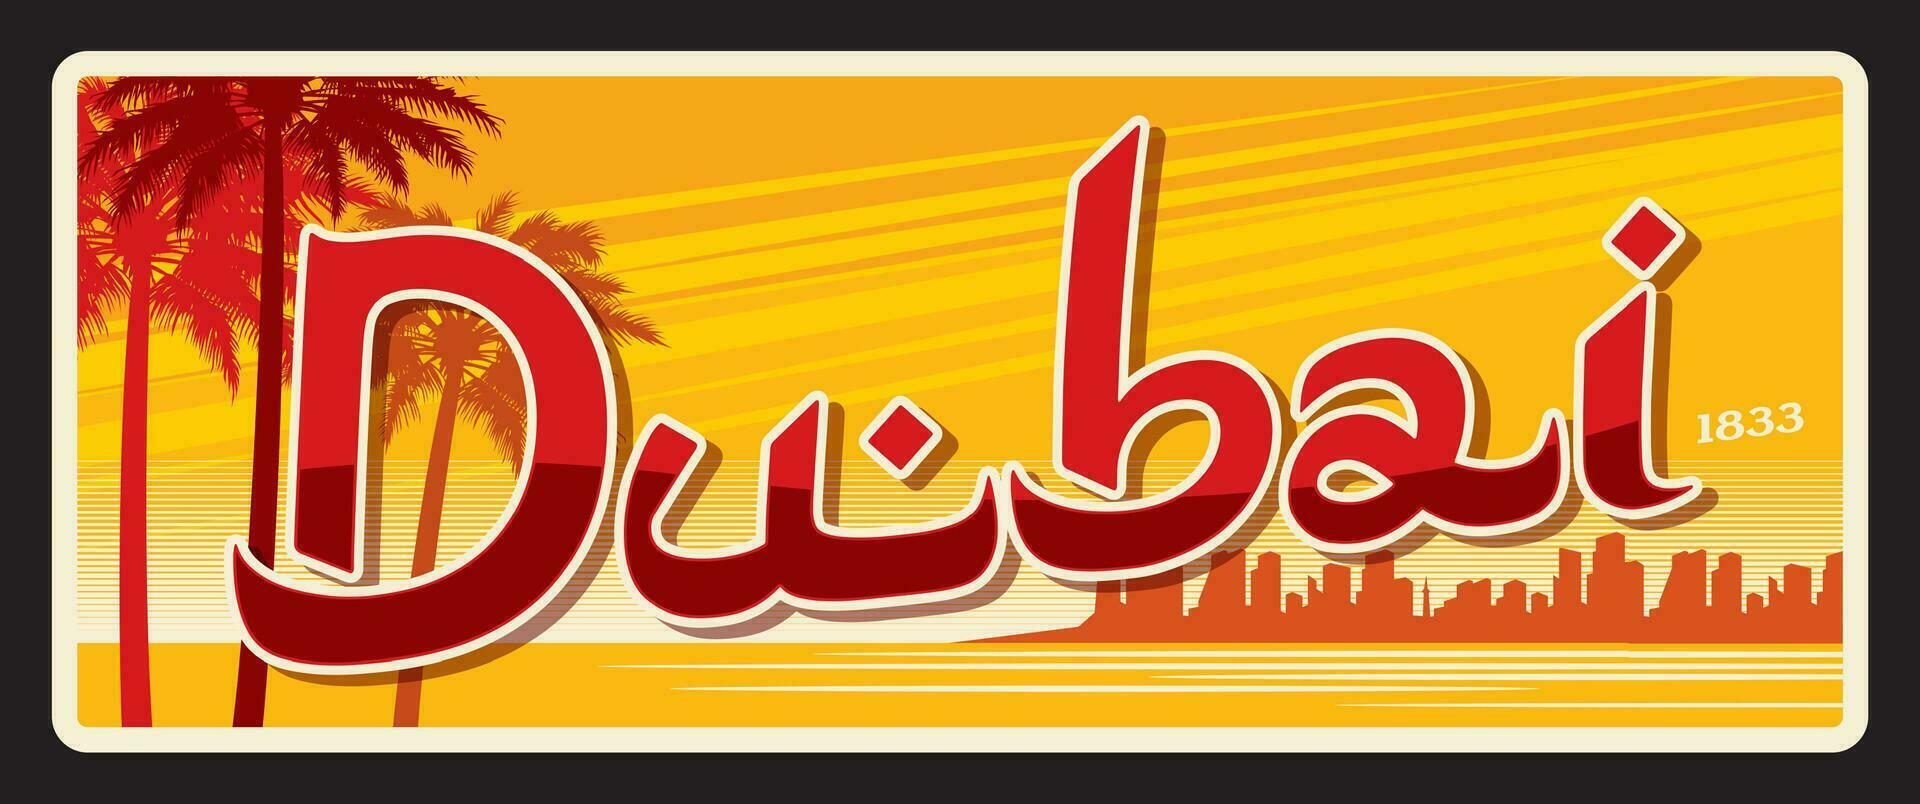 Dubai city travel sticker or plaque vector